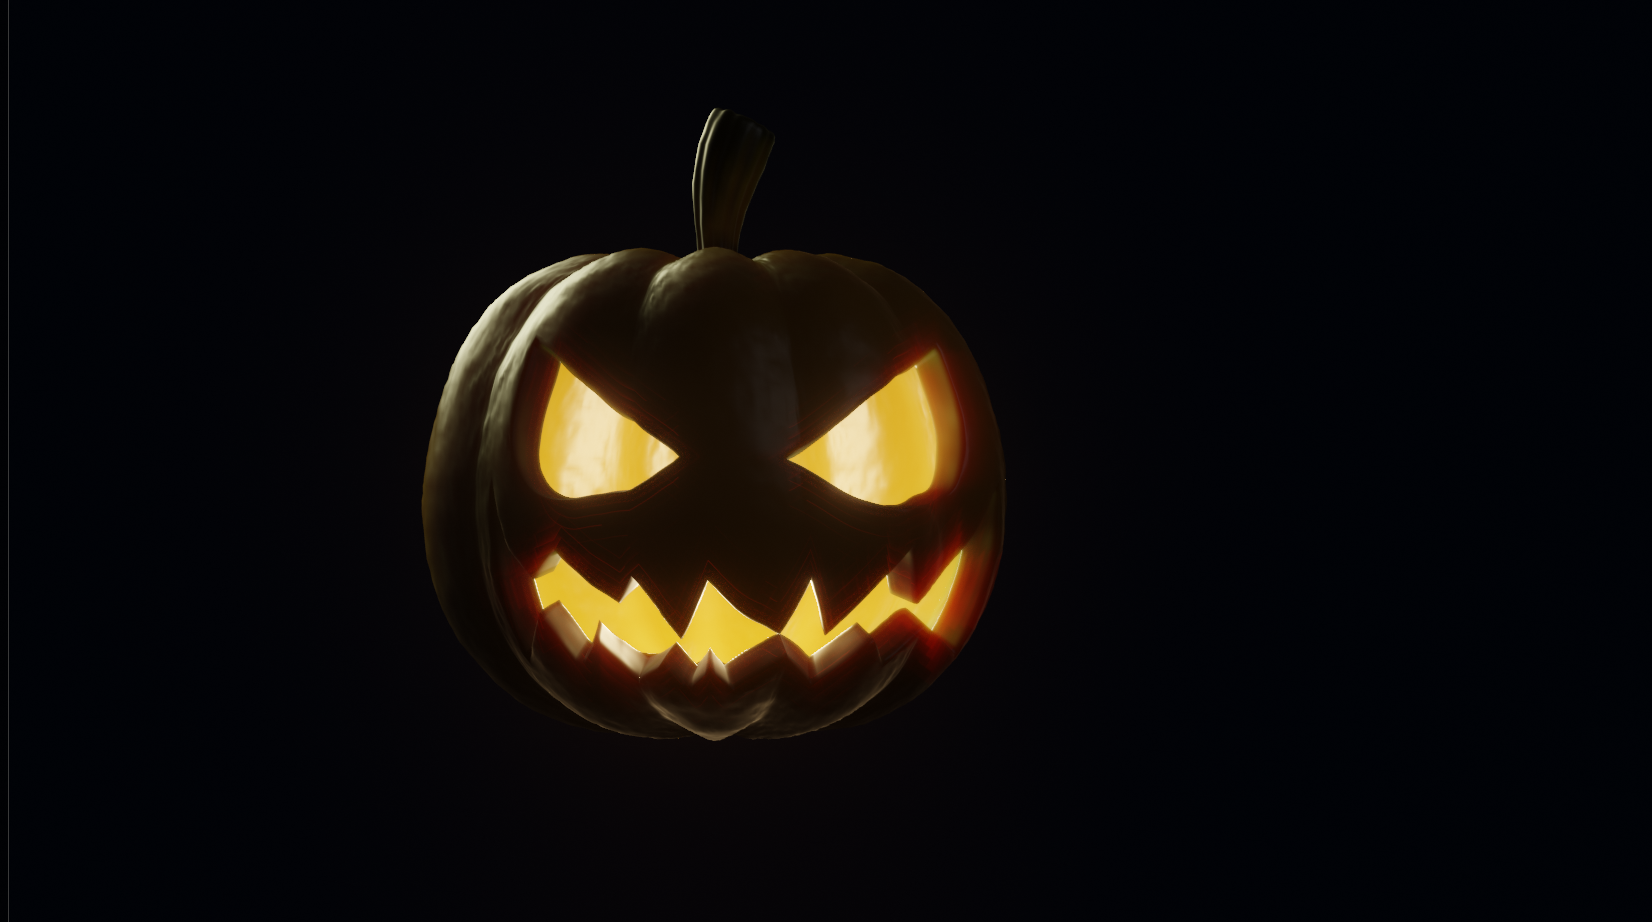 Halloween Jack O Lantern preview image 2